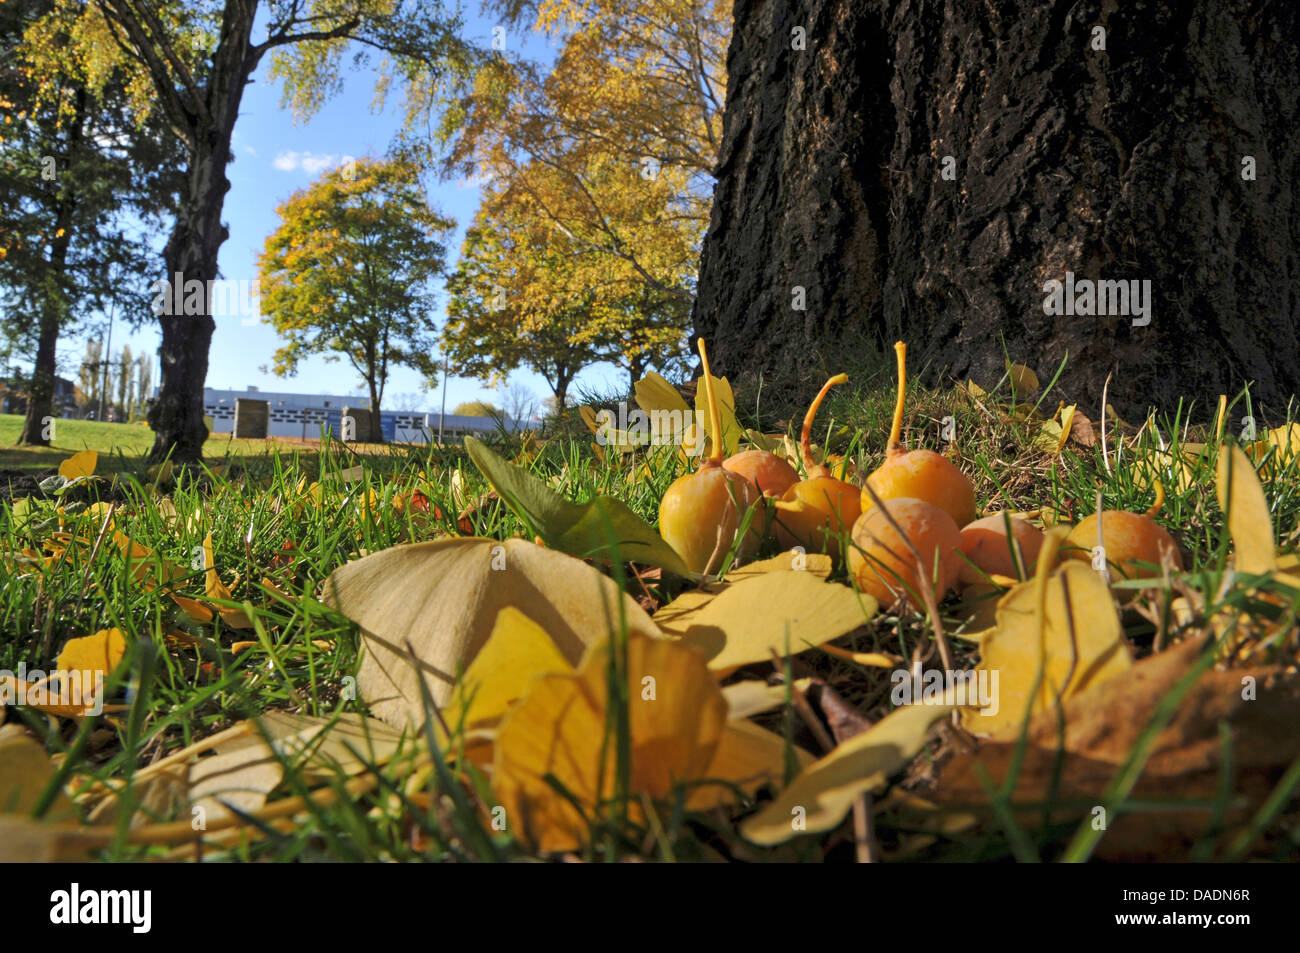 maidenhair tree, Ginkgo Tree, Gingko Tree, Ginko Tree (Ginkgo biloba), autumn leaves and fruits in meadow, Germany, Nordrhein Westfalen Stock Photo